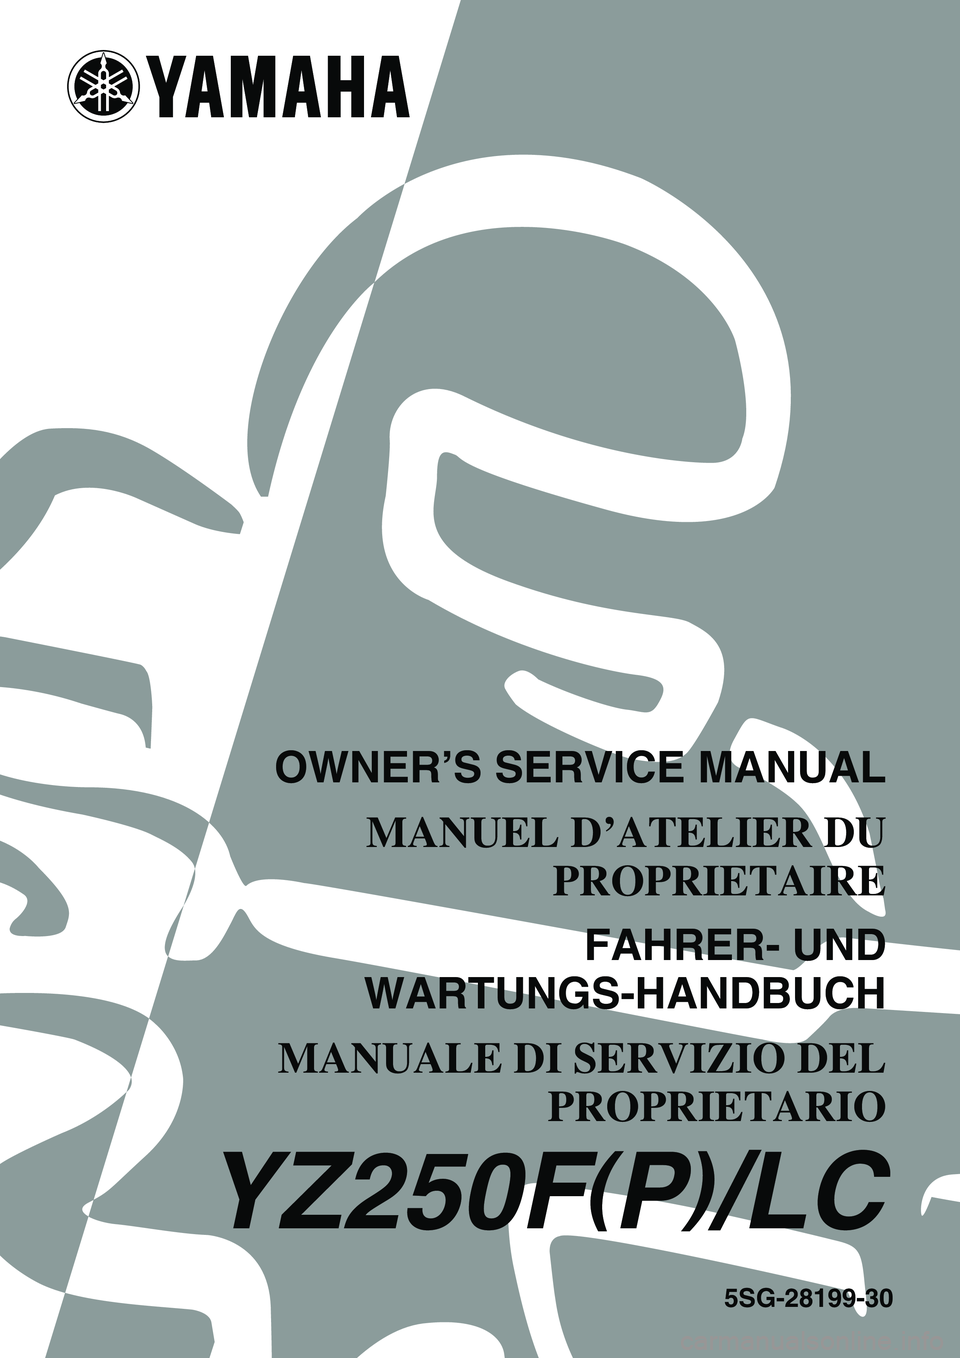 YAMAHA YZ250F 2002  Manuale duso (in Italian) 5SG-28199-30
YZ250F(P)/LC
OWNER’S SERVICE MANUAL
MANUEL D’ATELIER DU
PROPRIETAIRE
FAHRER- UND
WARTUNGS-HANDBUCH
MANUALE DI SERVIZIO DEL
PROPRIETARIO 